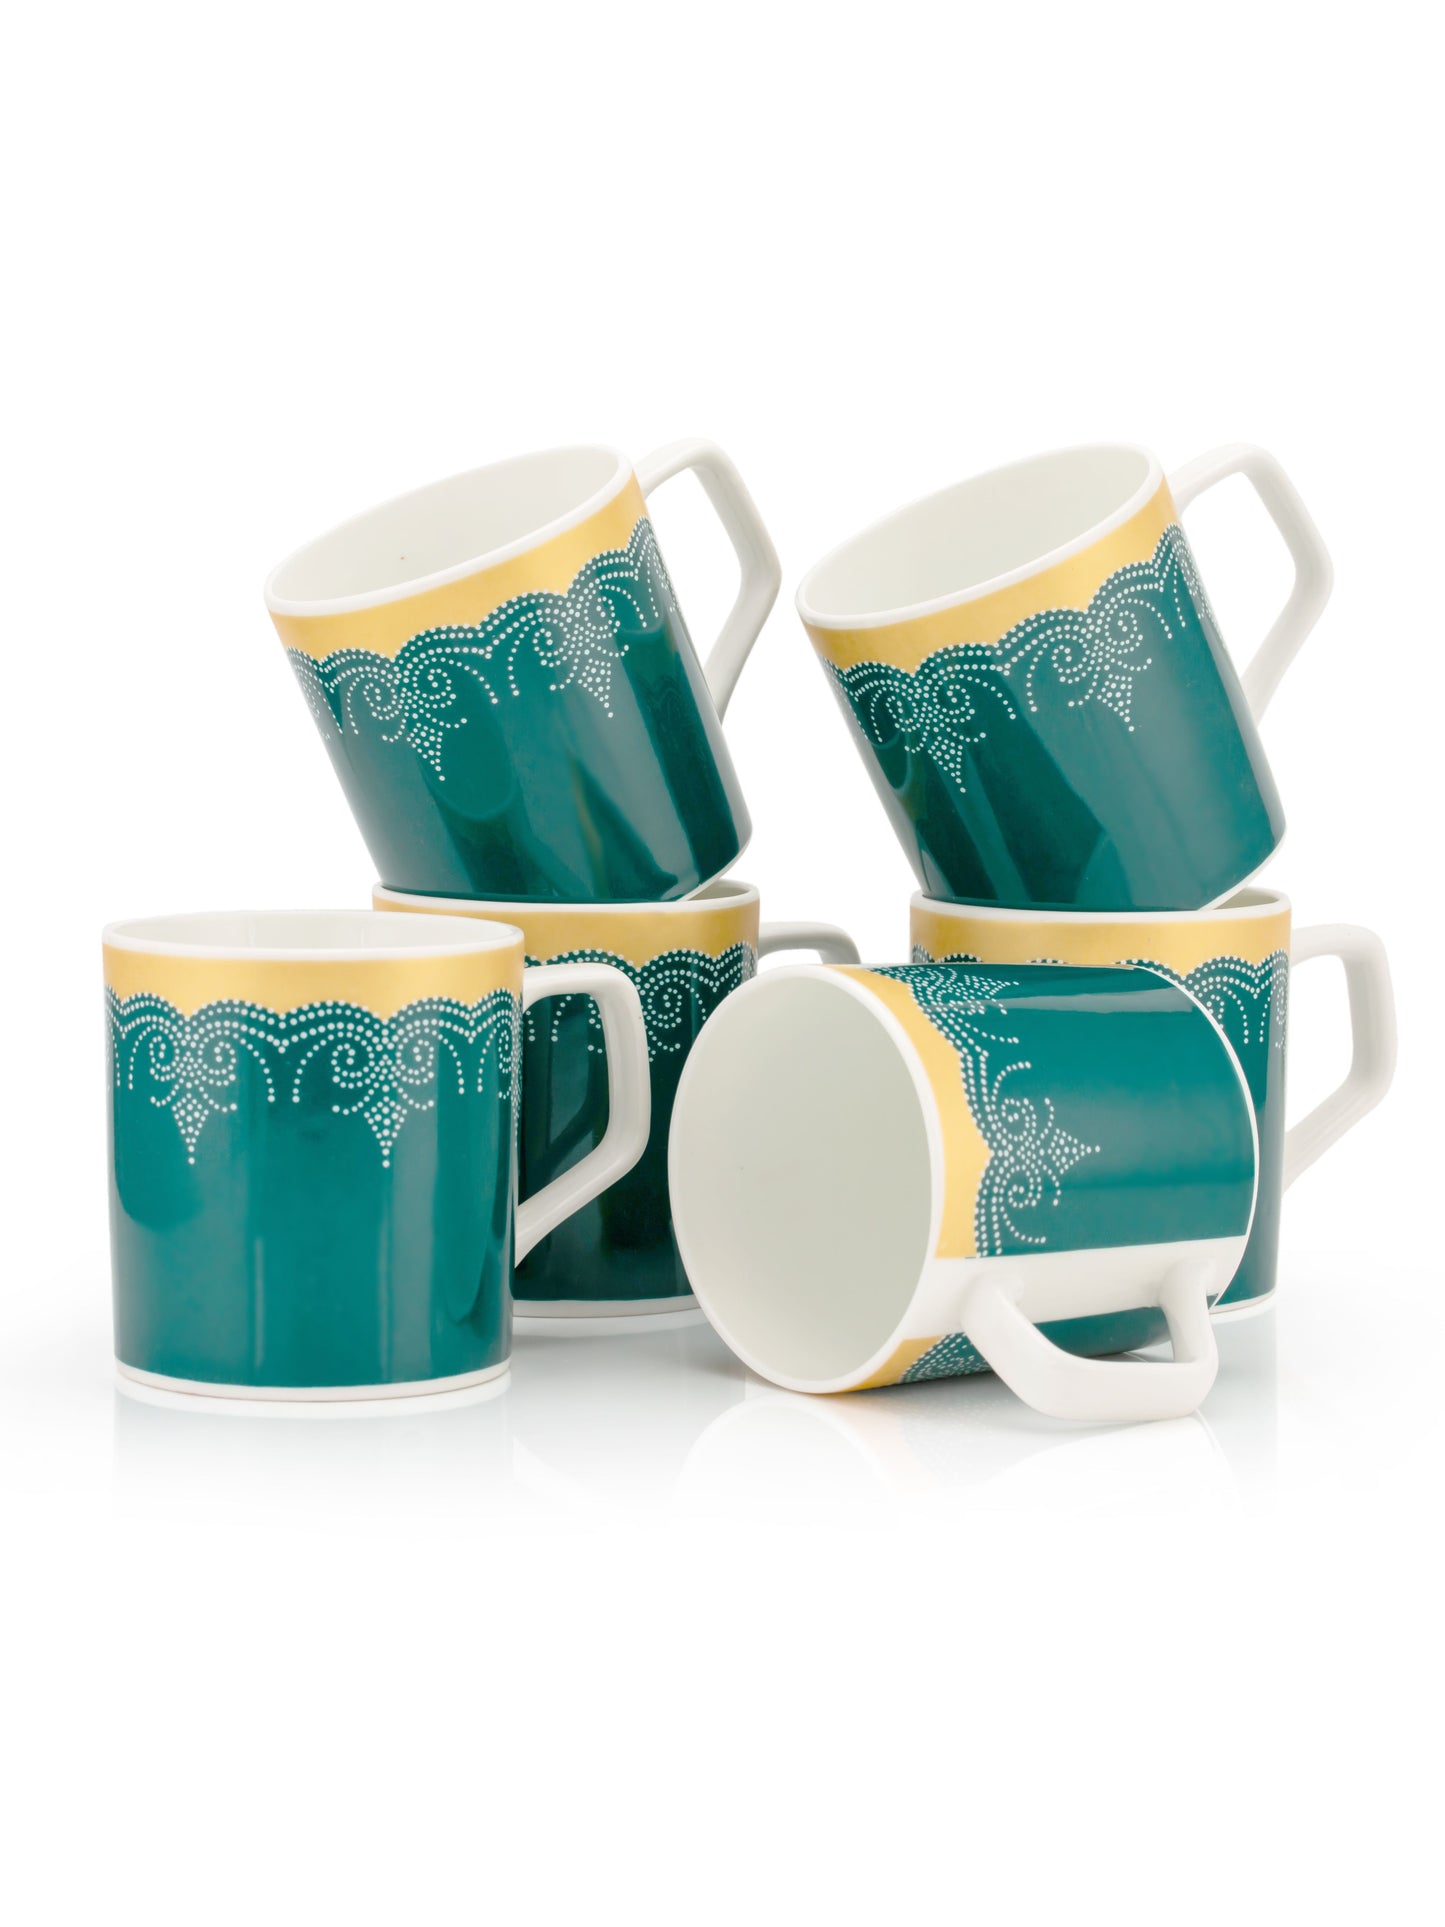 JCPL Director Hilton Coffee & Tea Mug Set of 6 (G301)